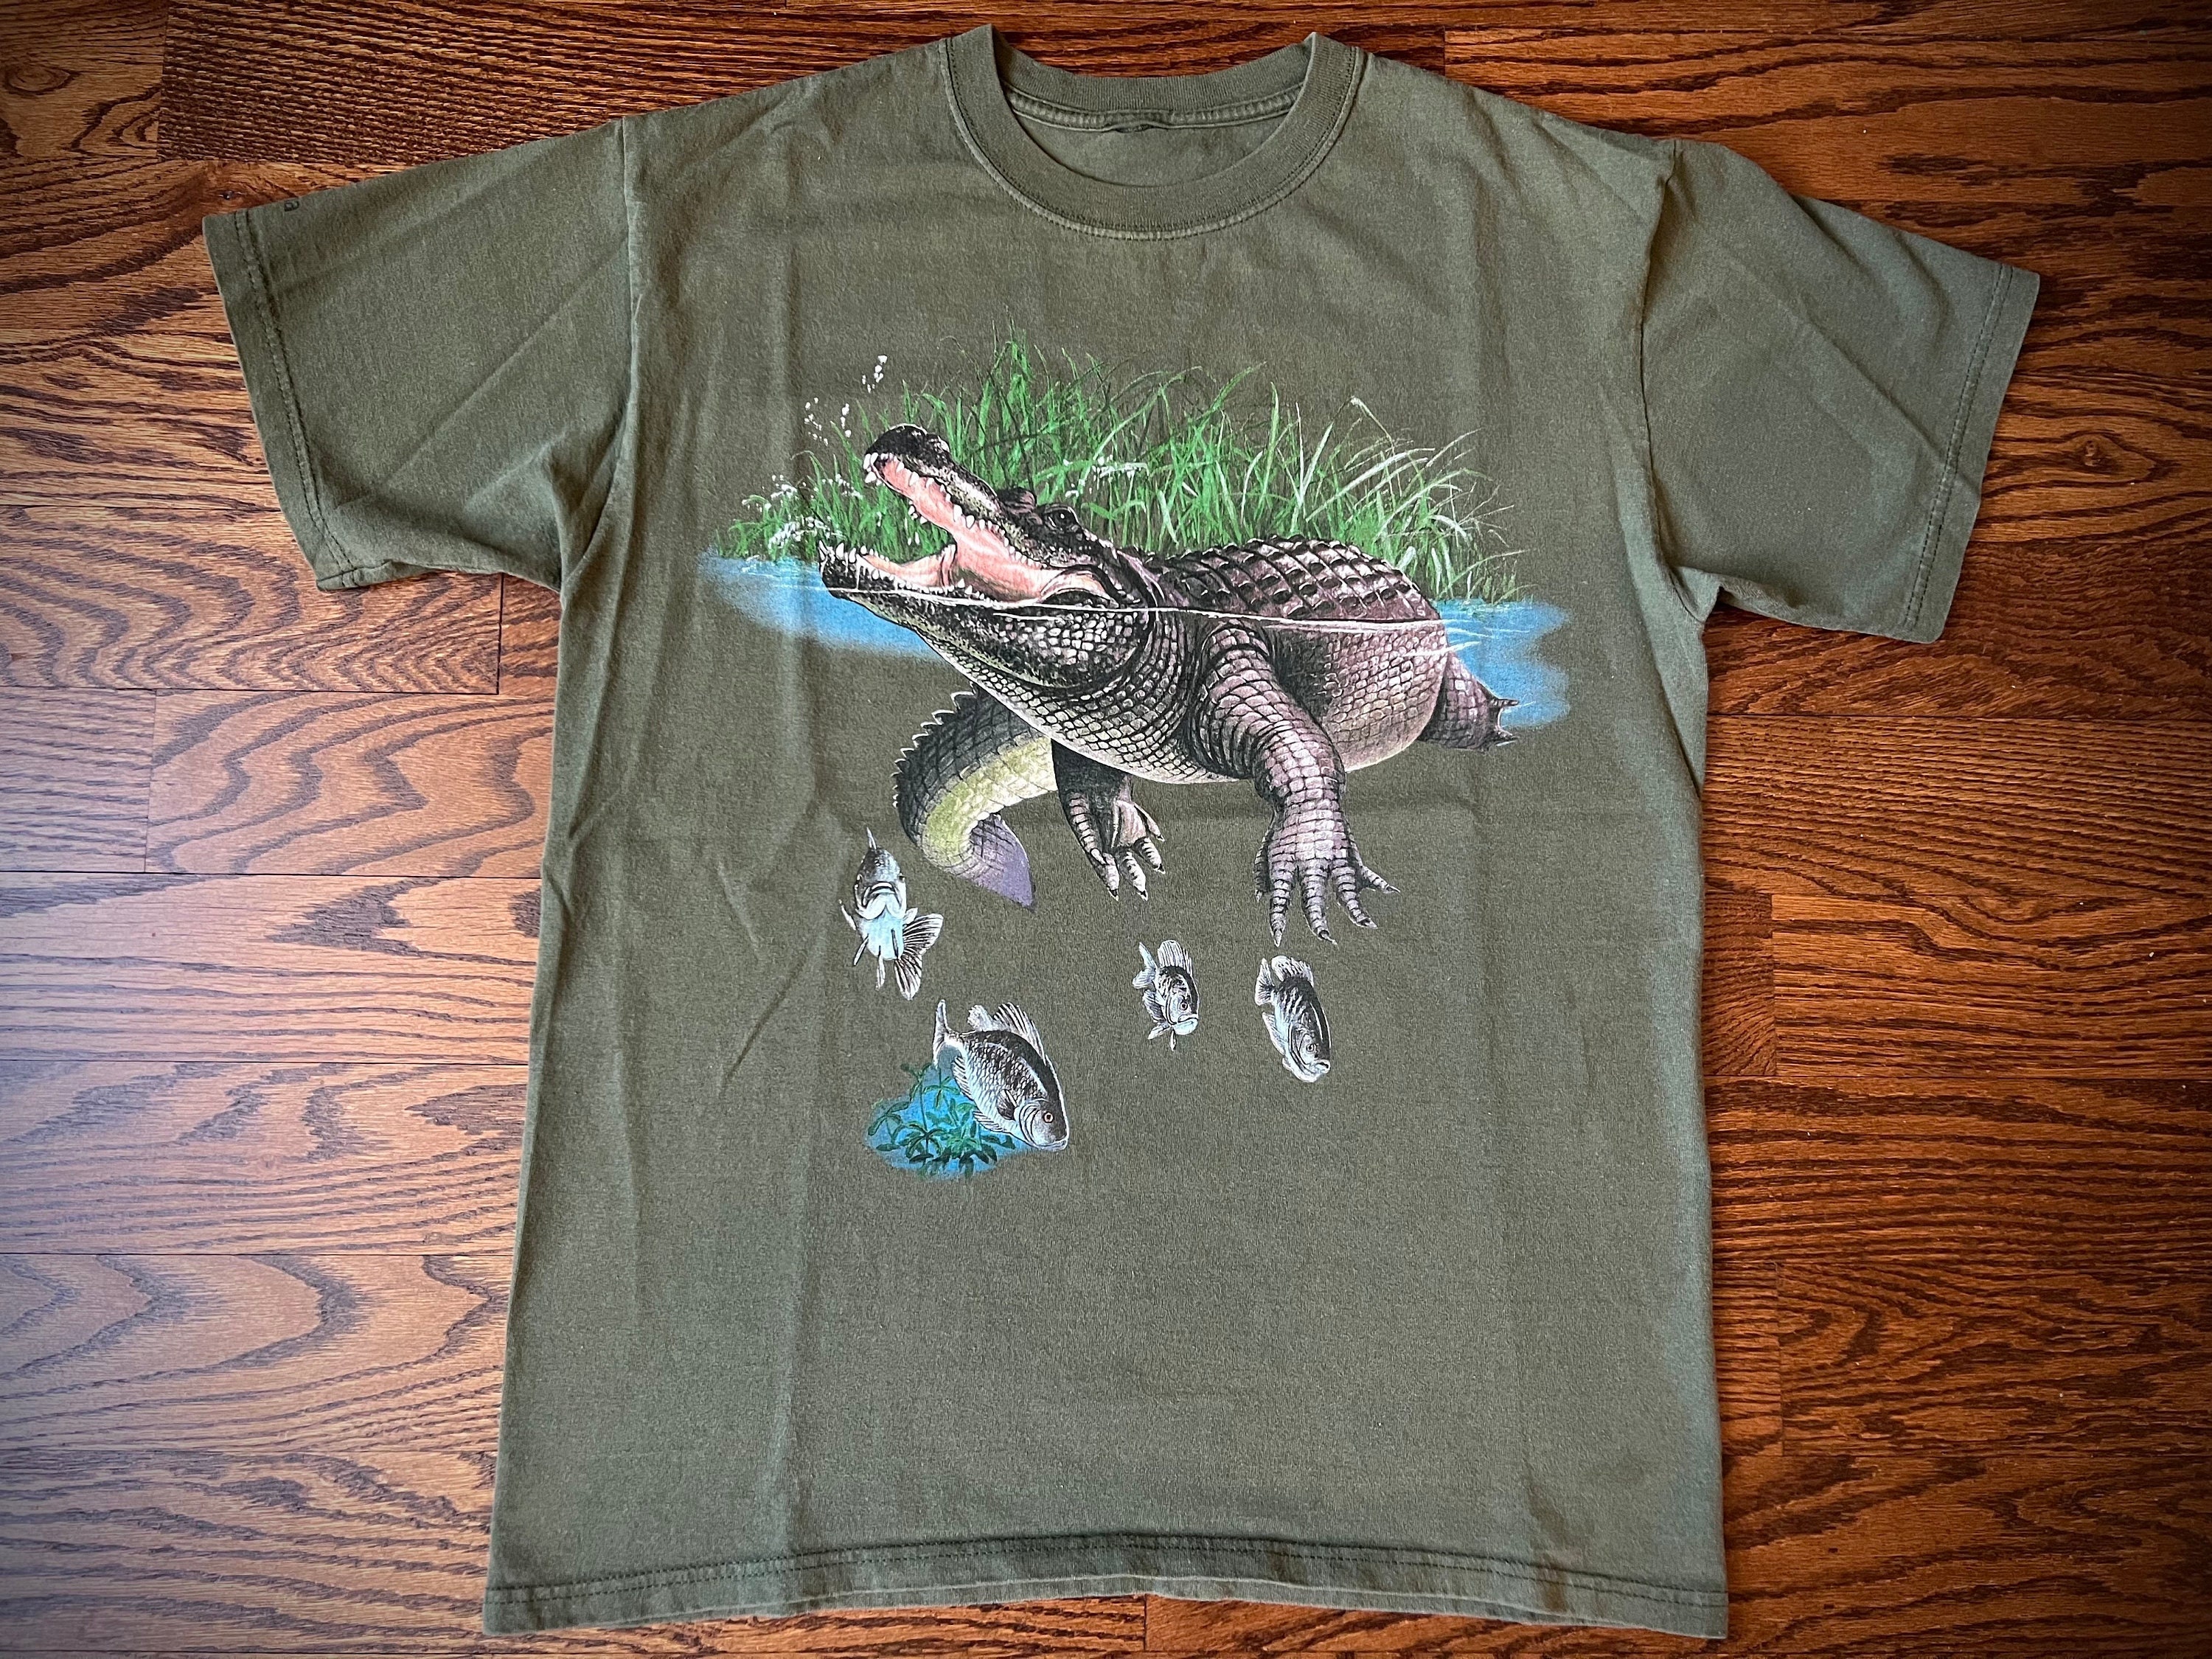 Vintage Louisiana Lizard cartoon t shirt 50/50